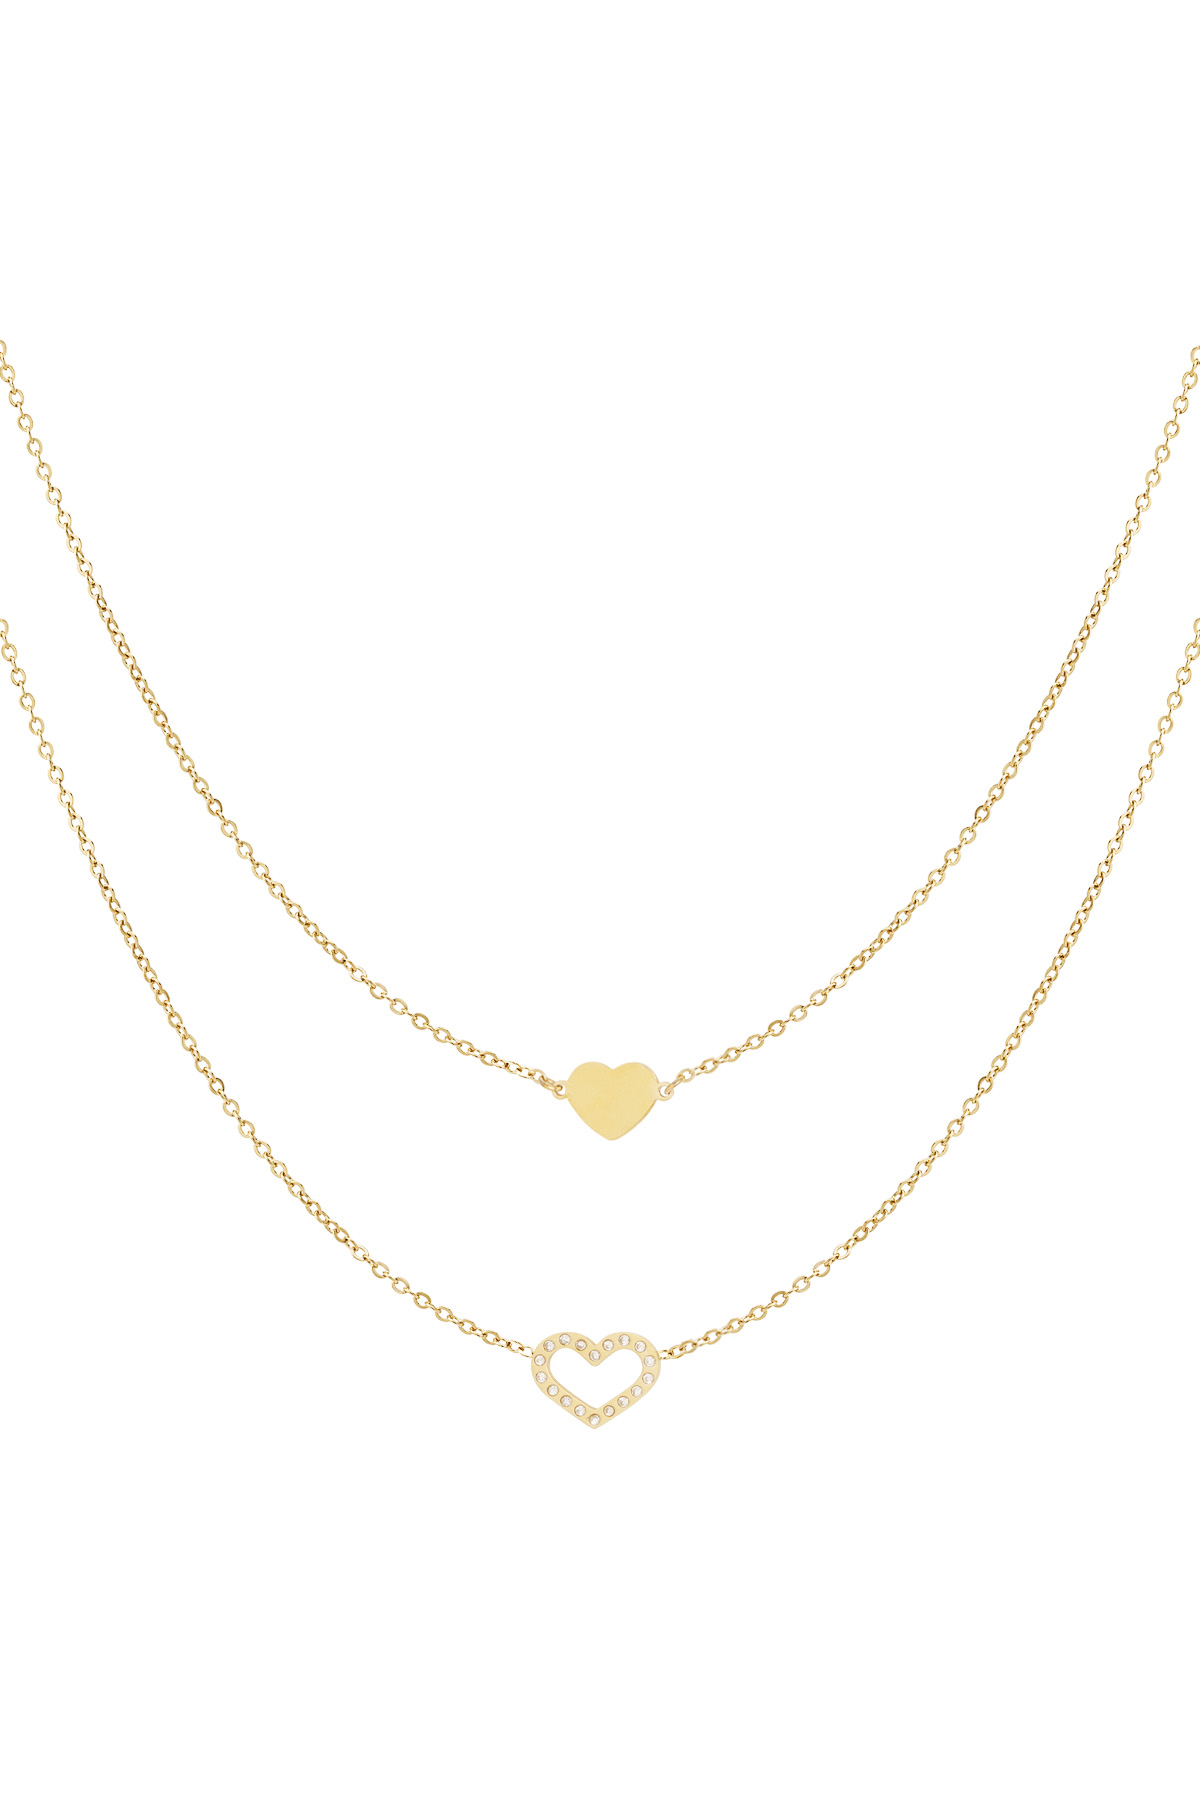 Necklace forever bond - gold h5 